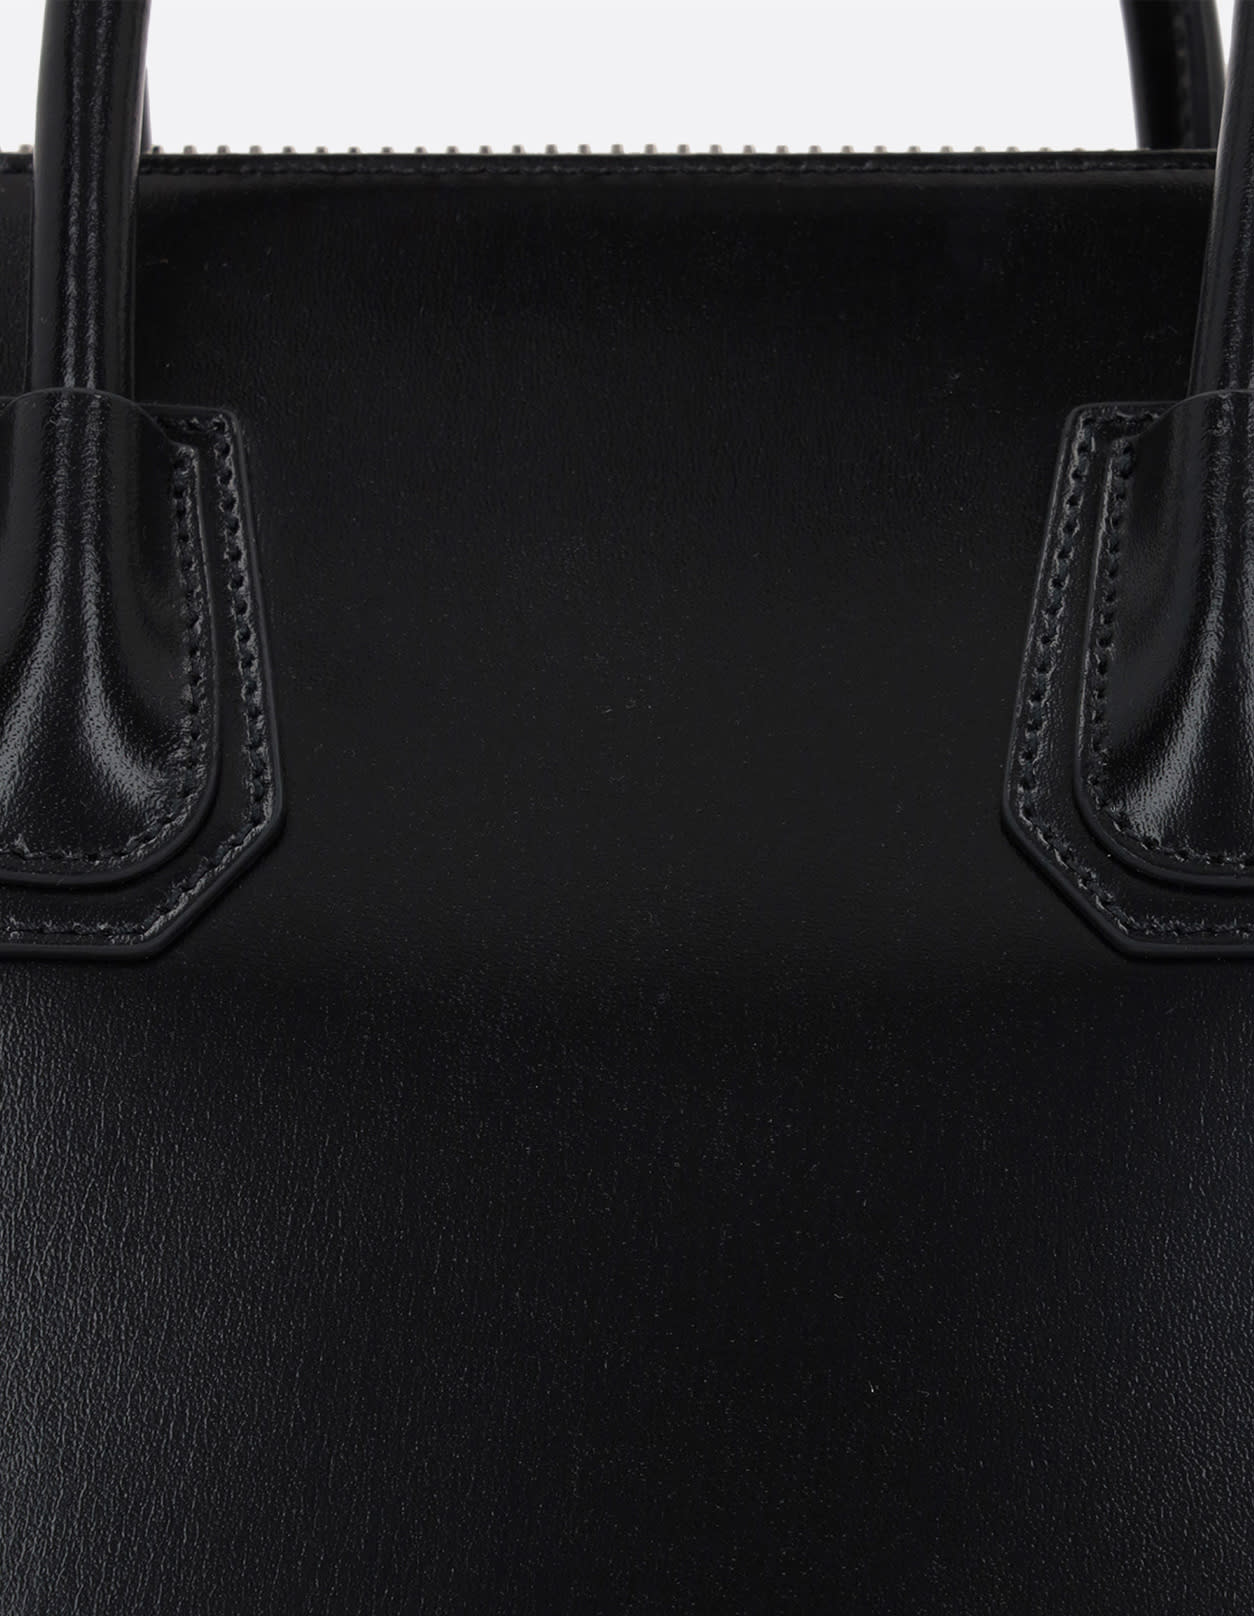 Shop Givenchy Black Small Antigona Bag